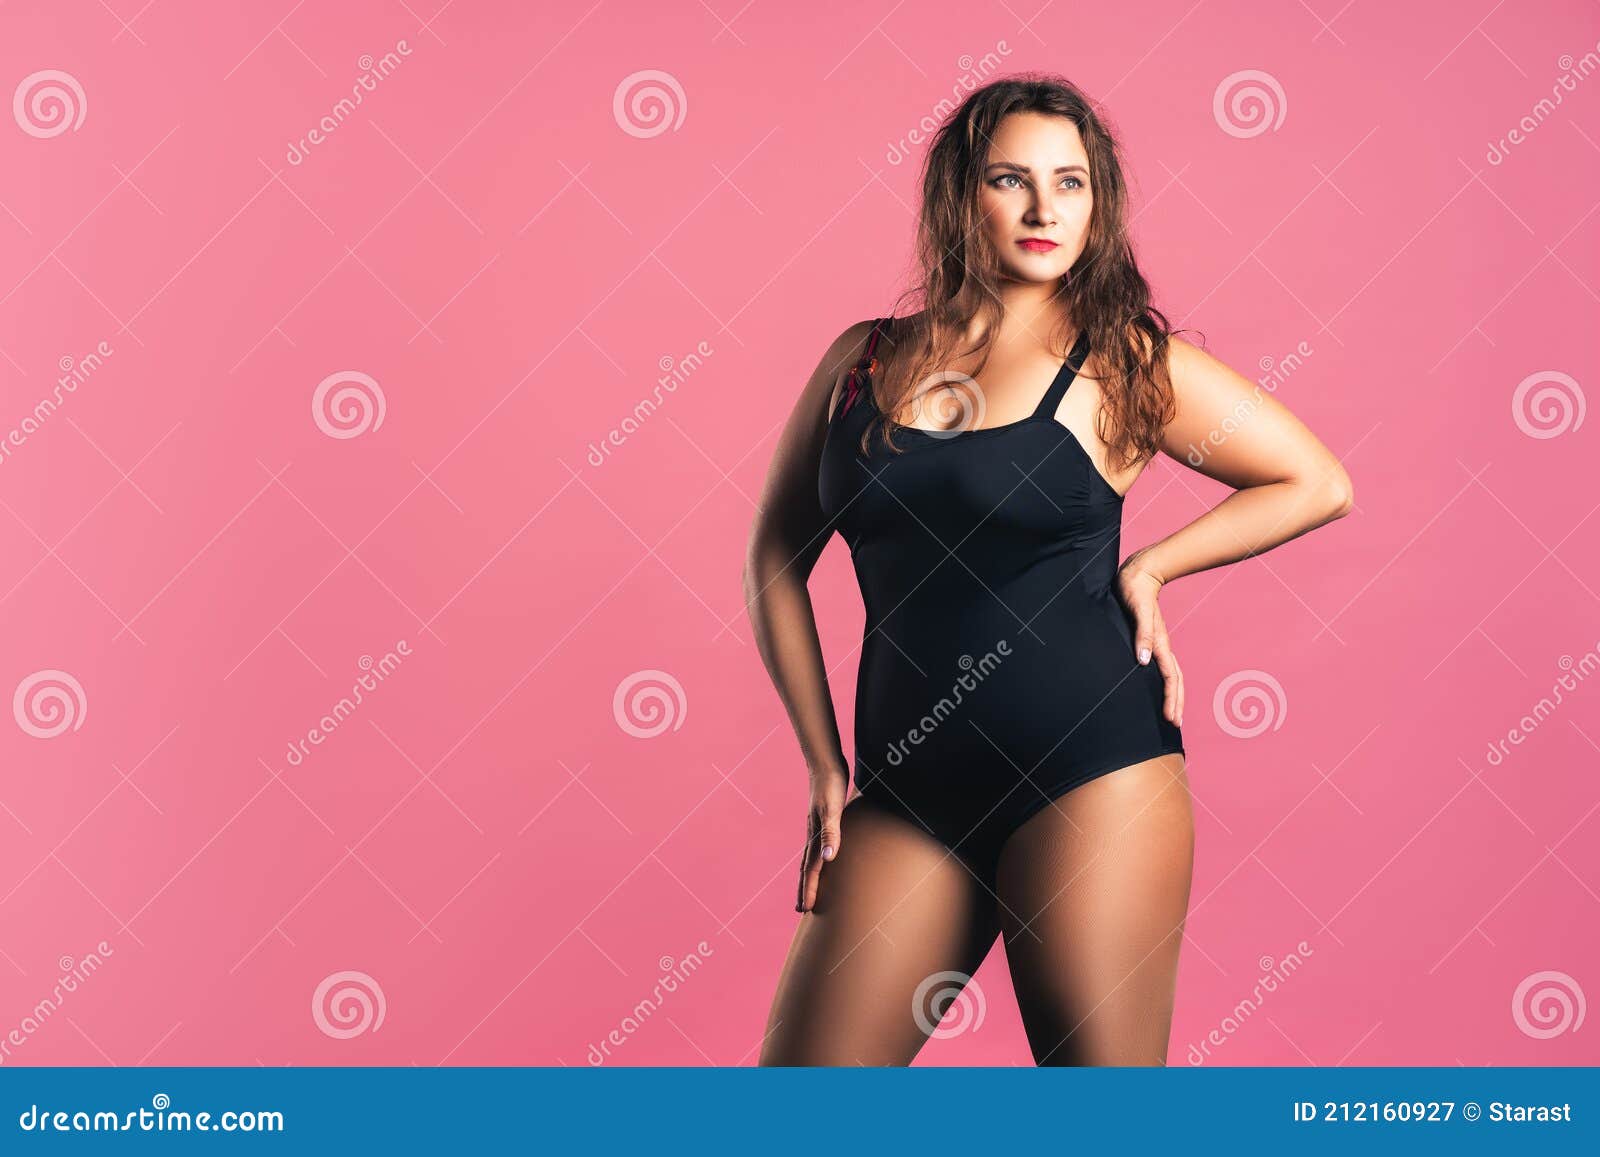 Plus Size Fashion Model in Black One-piece Swimsuit, Fat Woman in